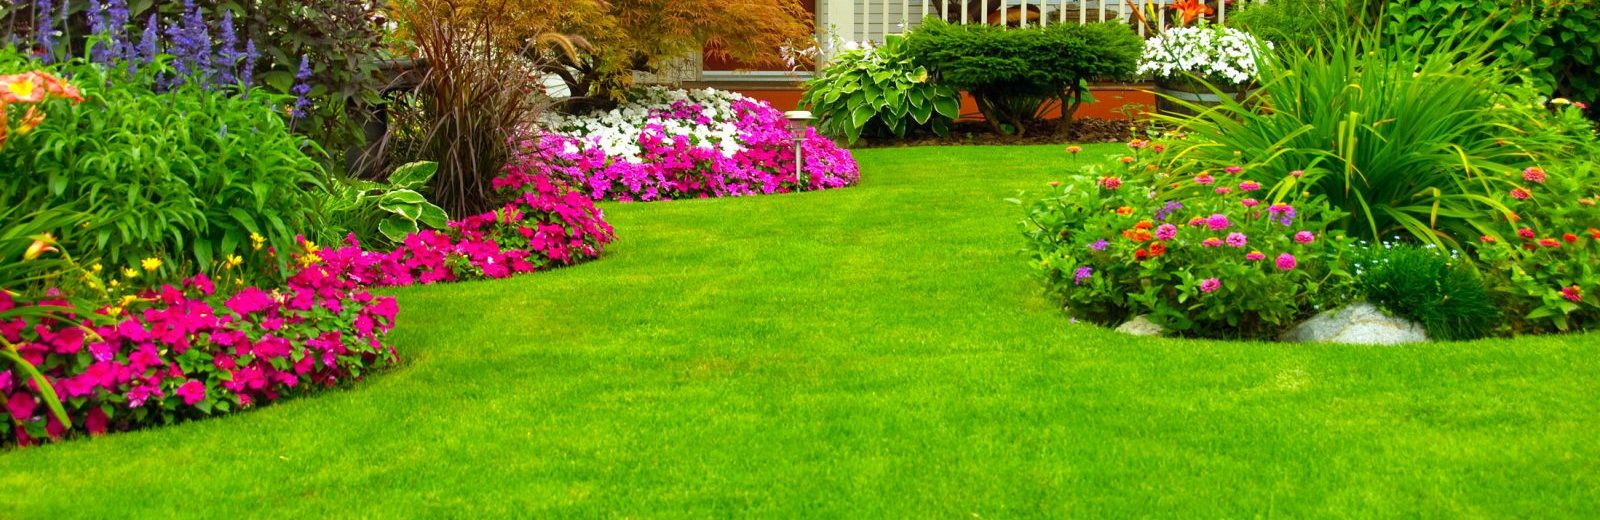 Lawn Care Maintenance Award Winning, Massey Landscape Services